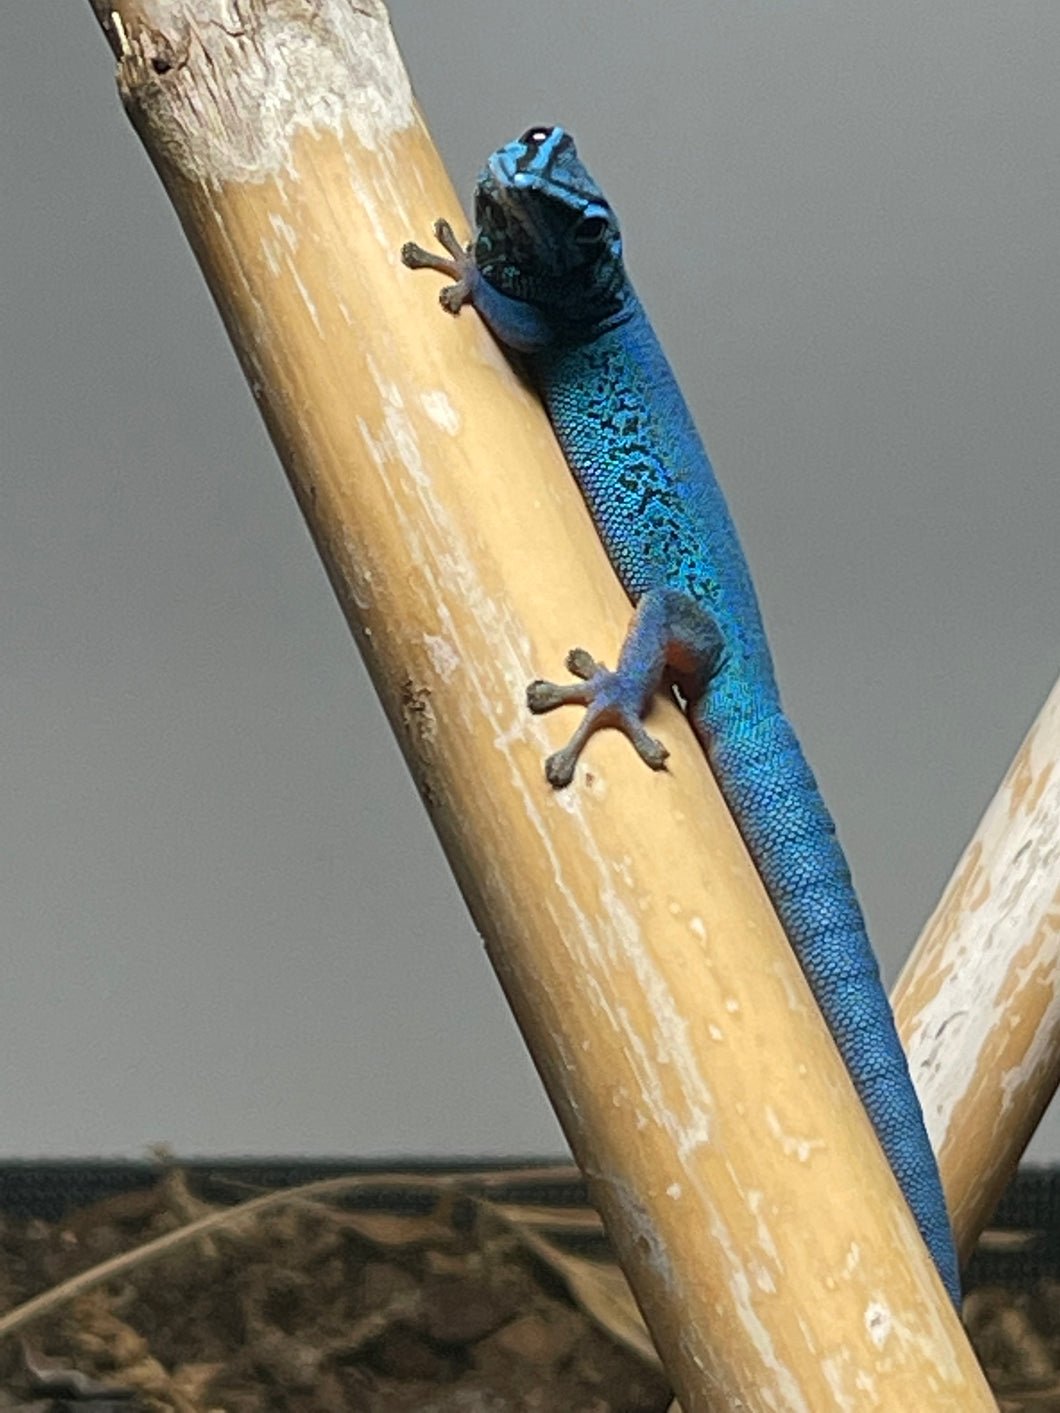 Lygodactylus Williamsi (Electric blue day gecko)